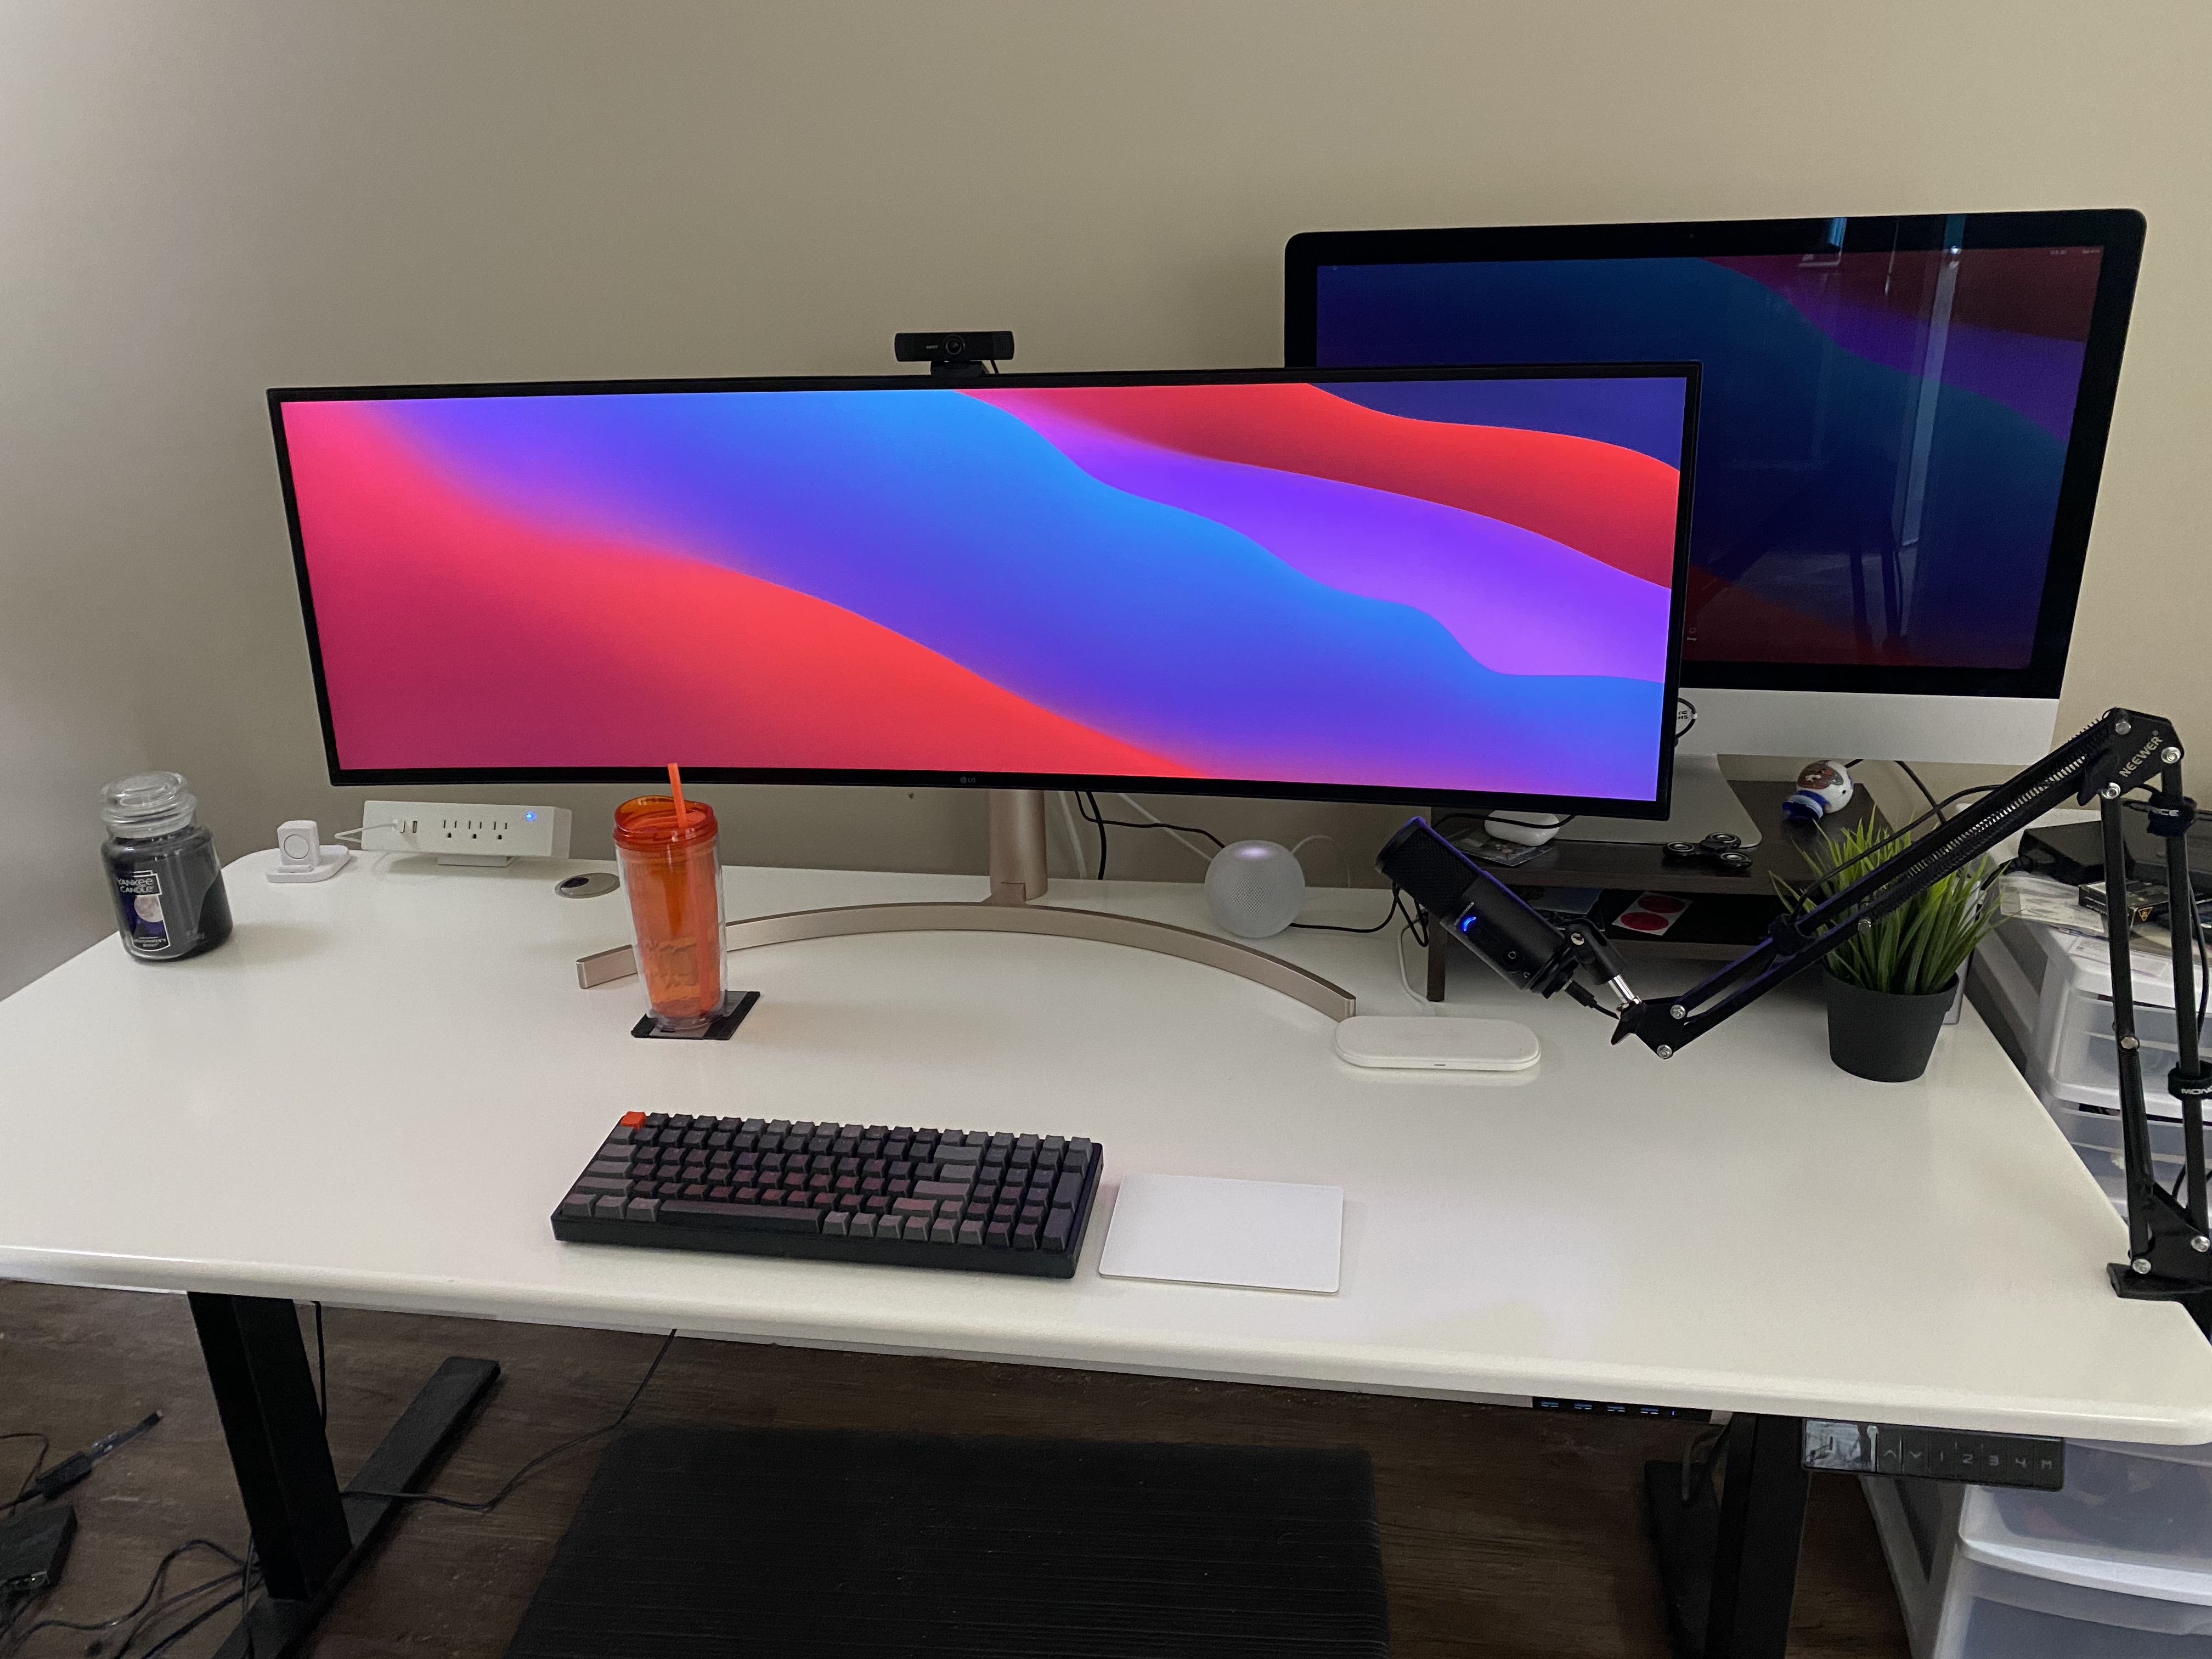 How my desk setup looks currently